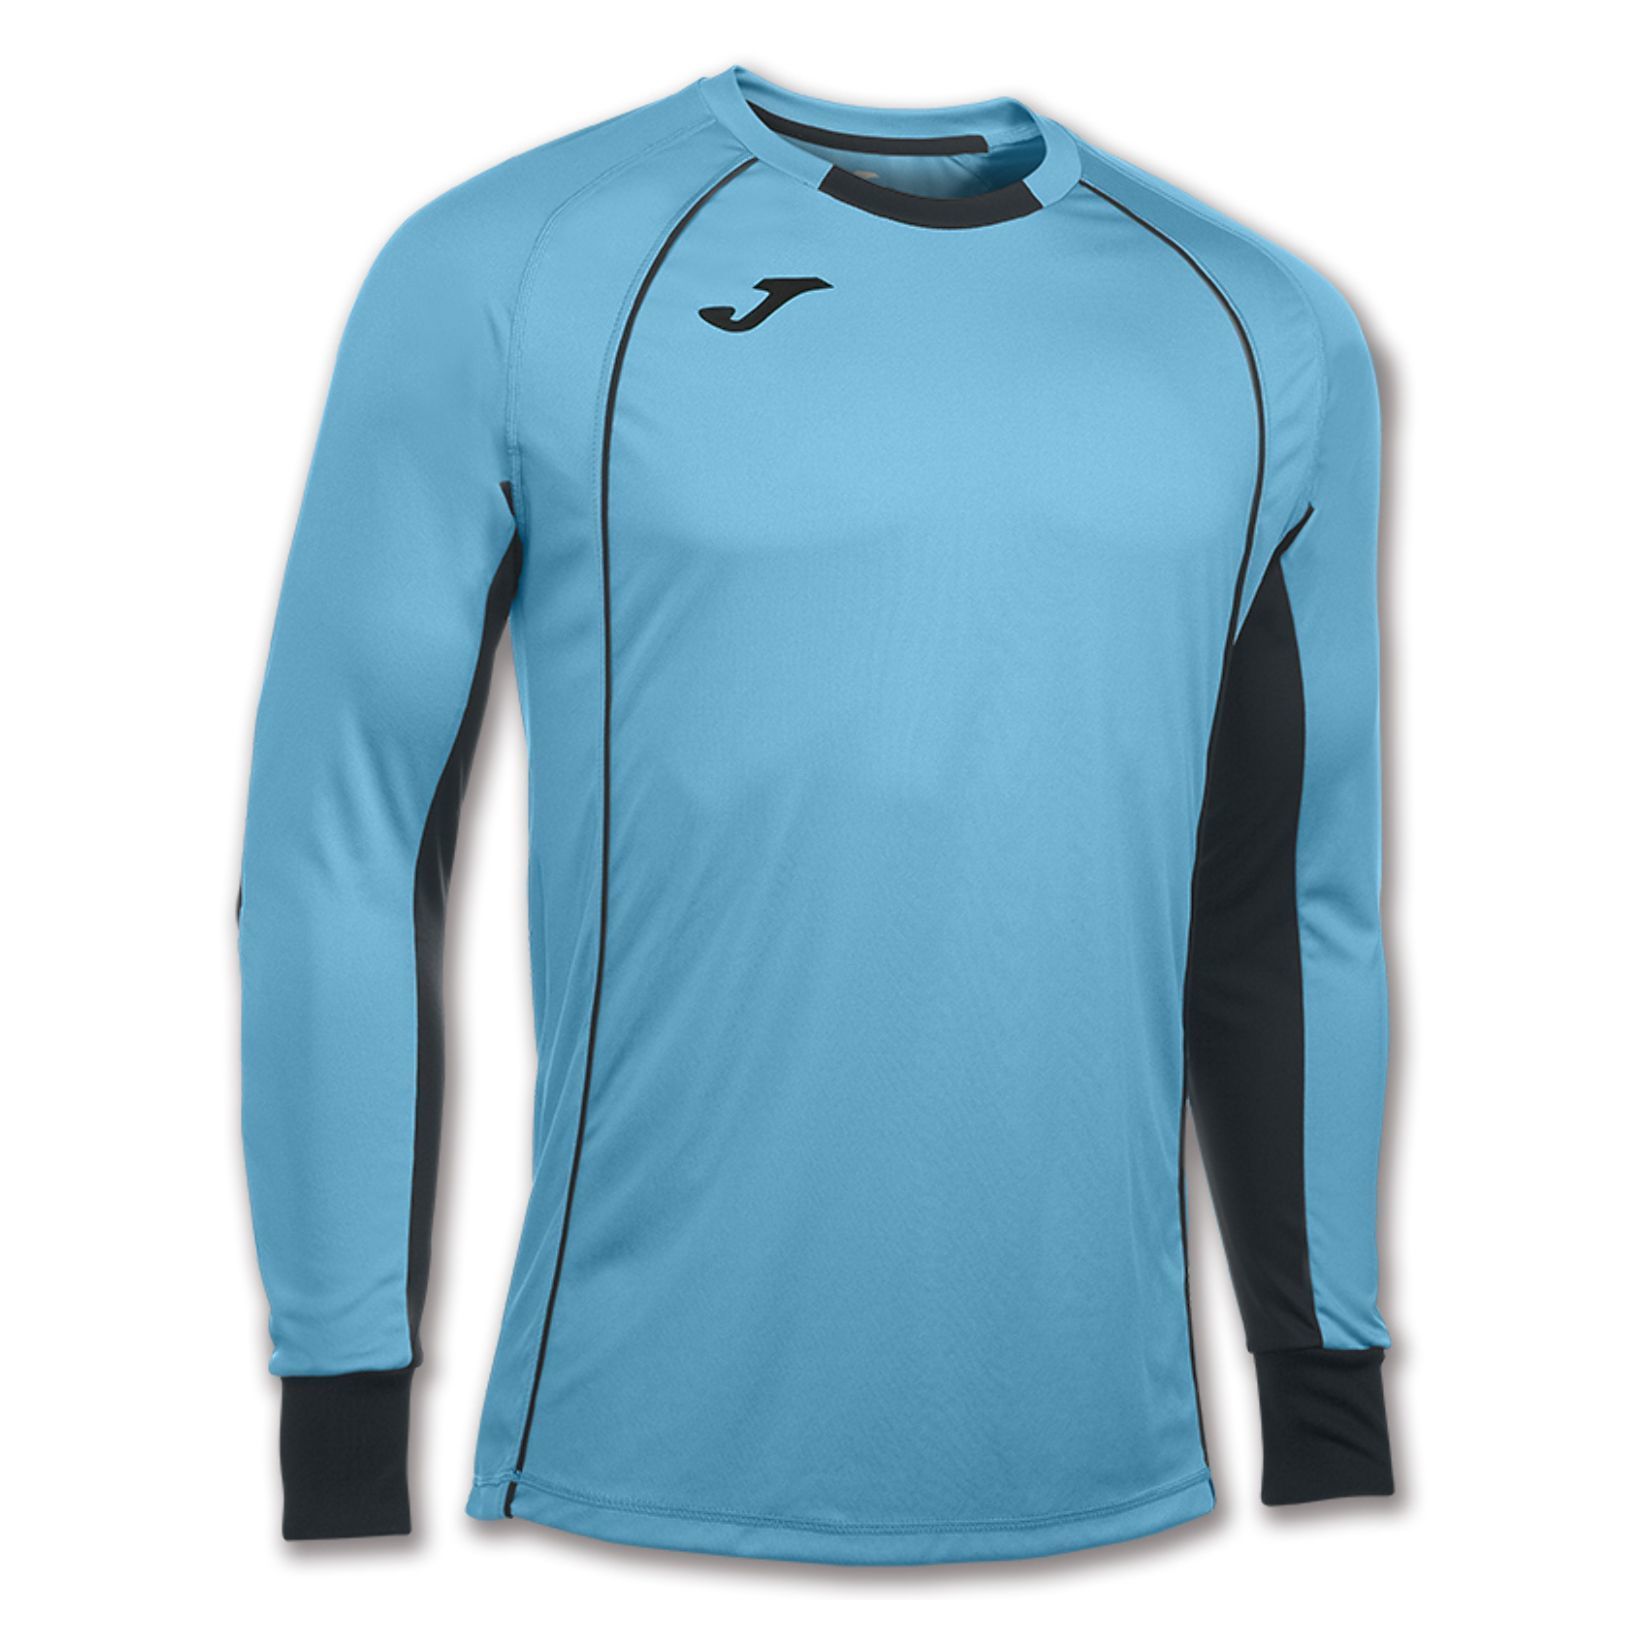 Joma Protec Long Sleeve Goalkeeper Shirt - Kitlocker.com